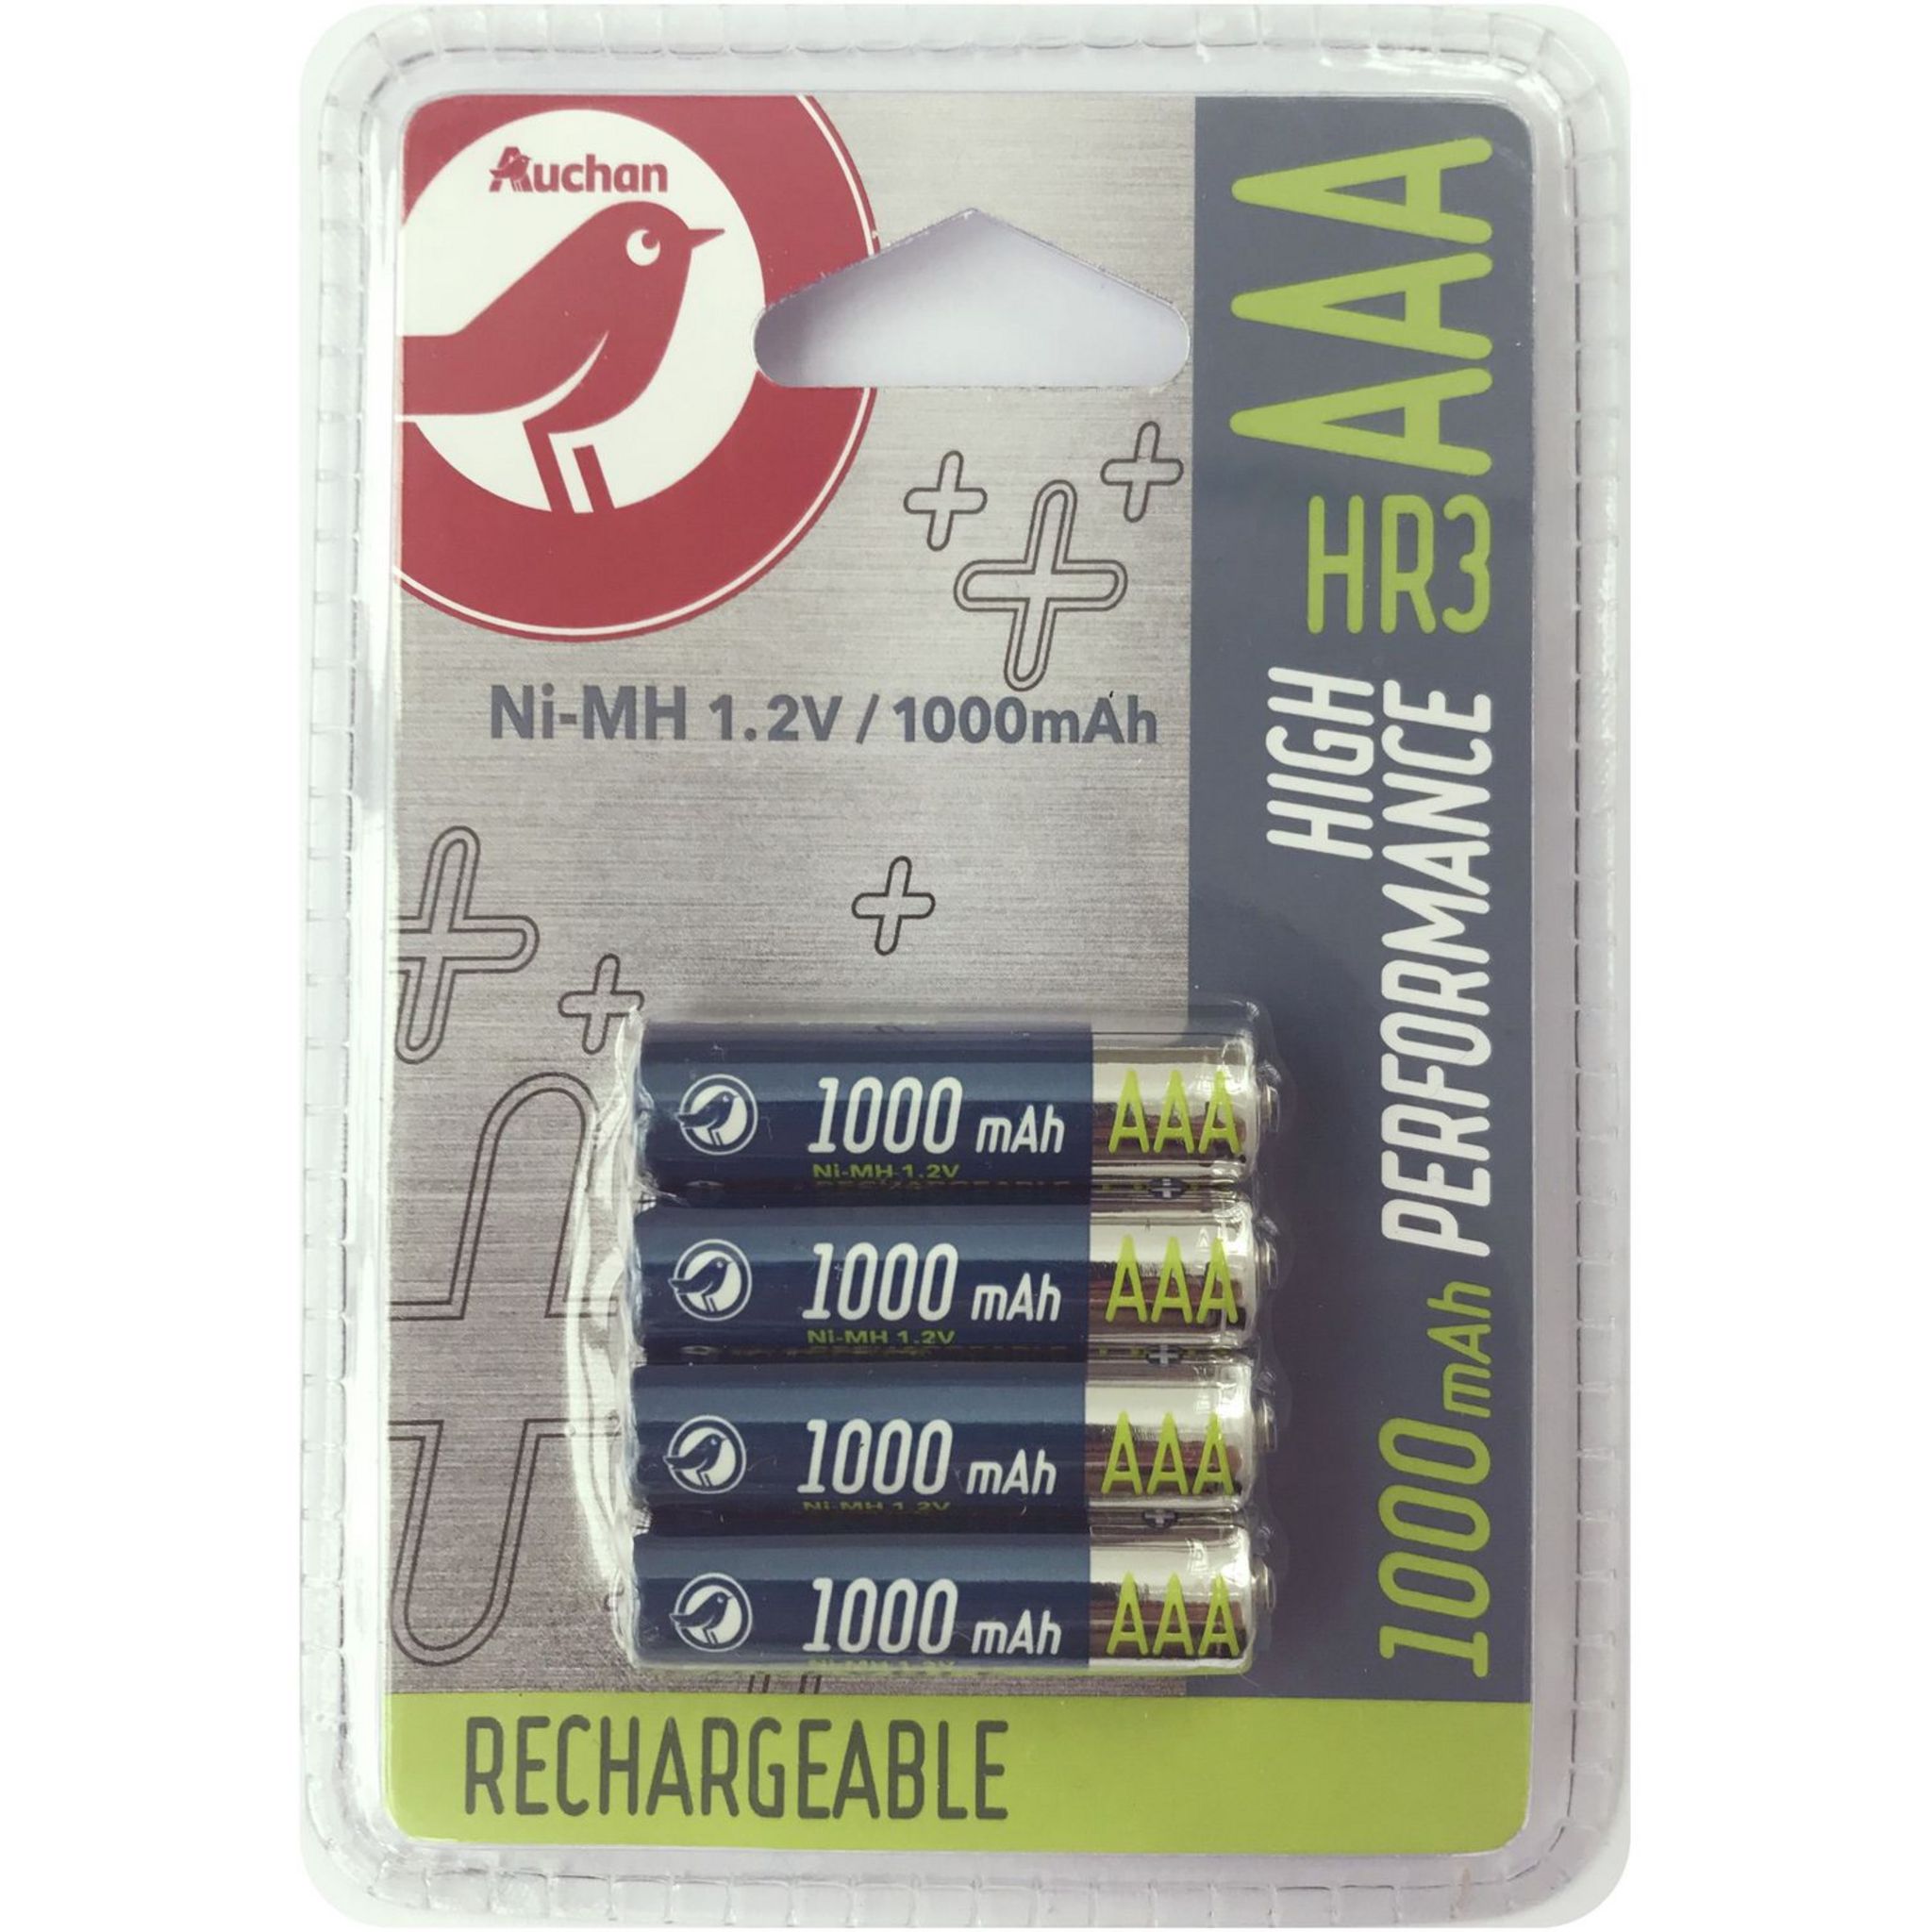 Vhbw - vhbw Lot de 4 piles rechargeables AAA, HR03 1000mAh